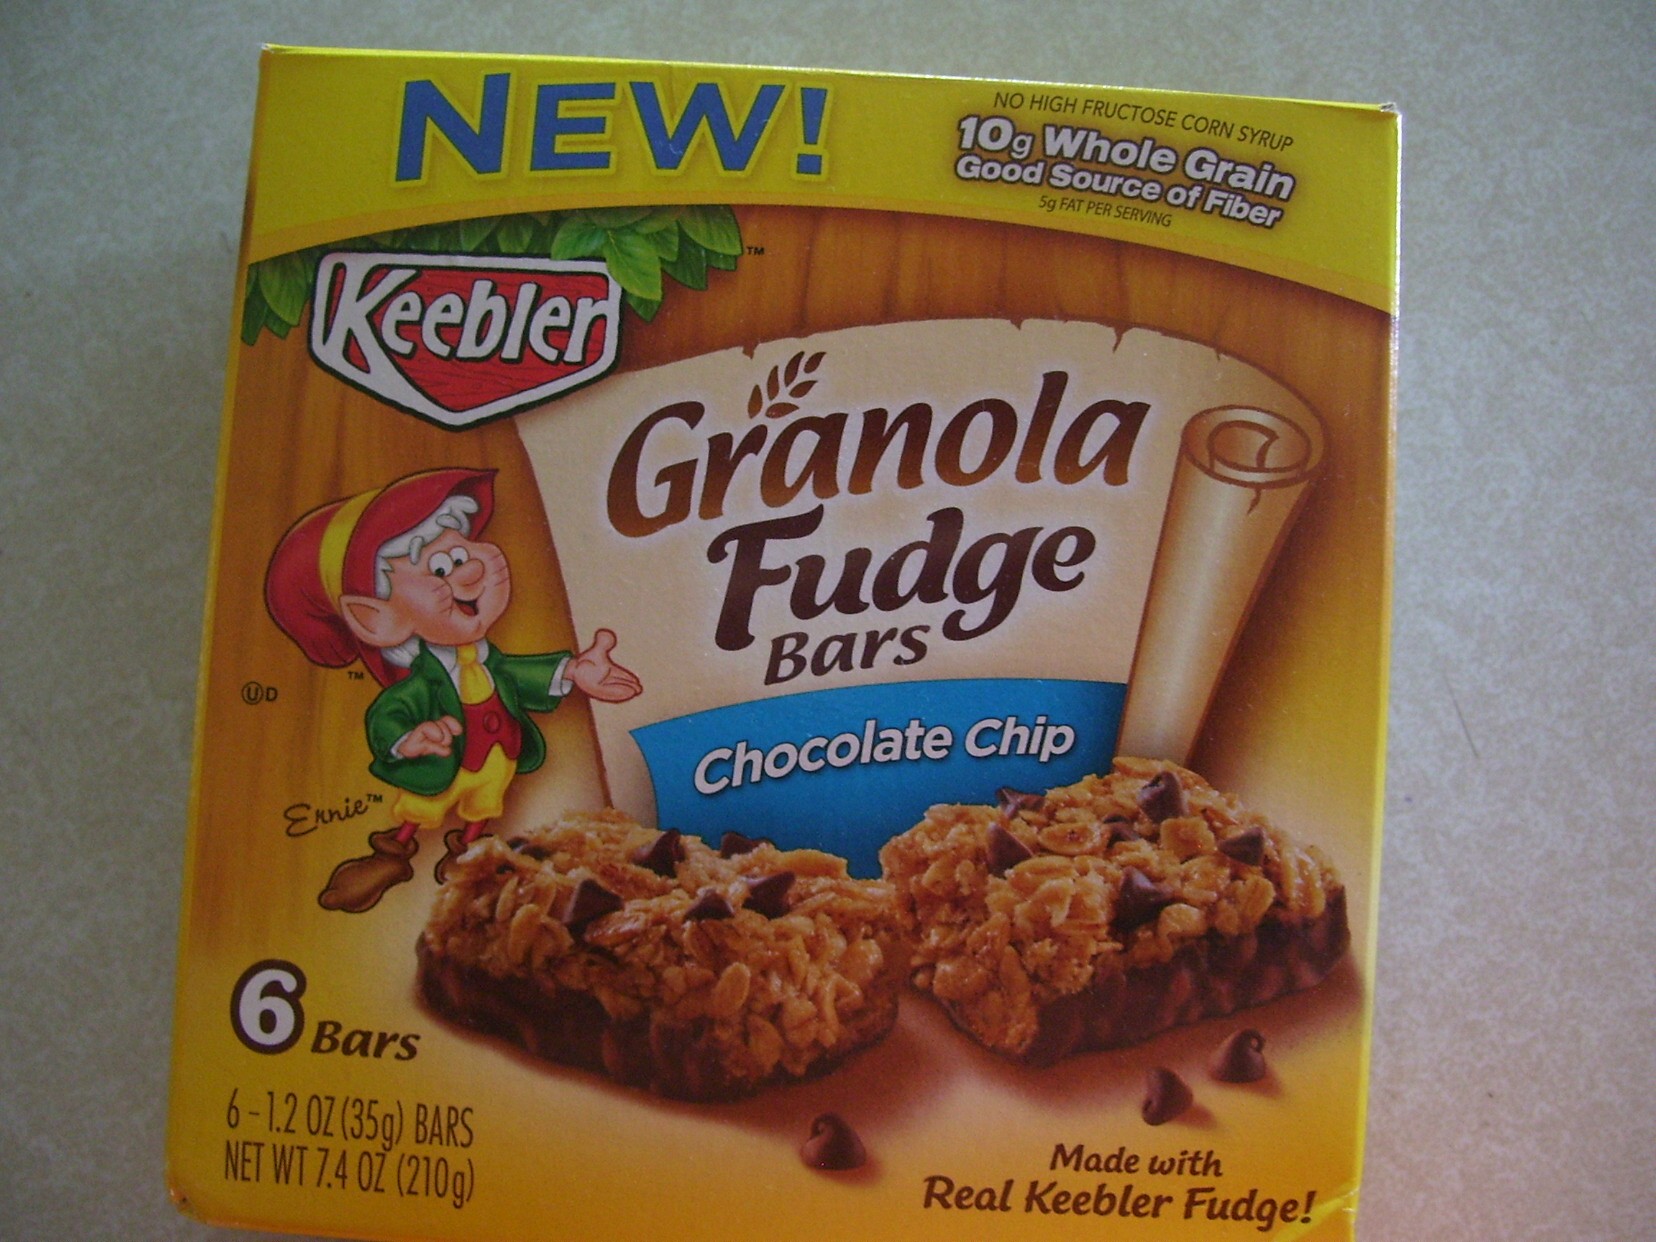 Snack Break:  Keebler Granola Fudge Bars